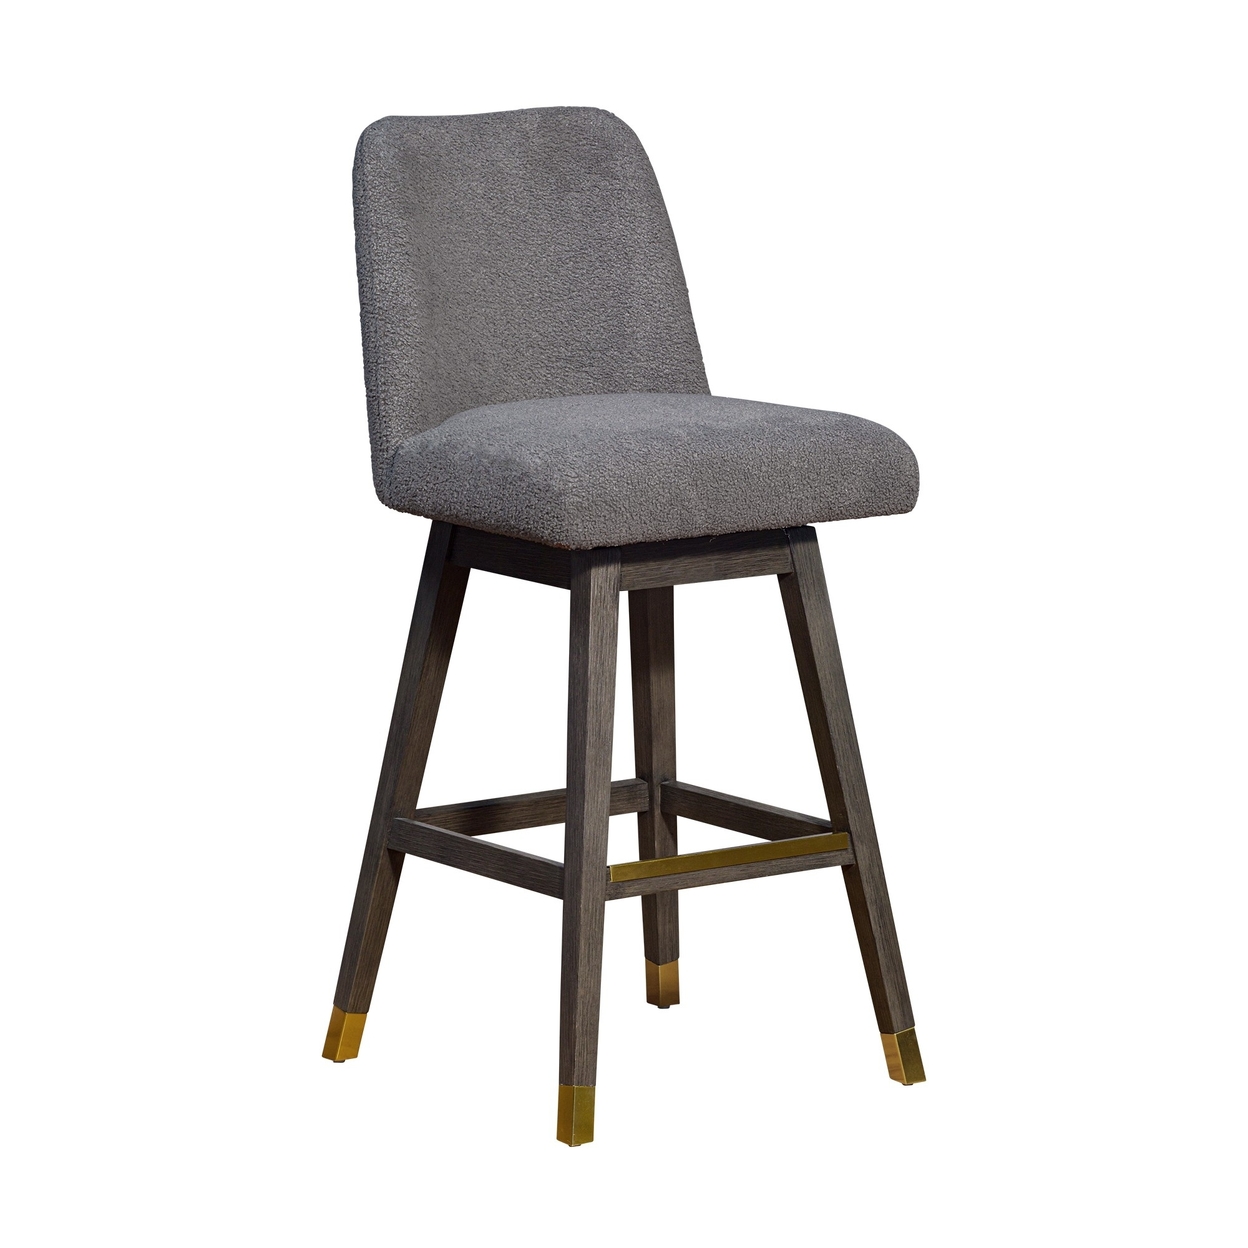 Lara 30 Inch Swivel Barstool Chair, Soft Gray Boucle Fabric, Wood Legs- Saltoro Sherpi